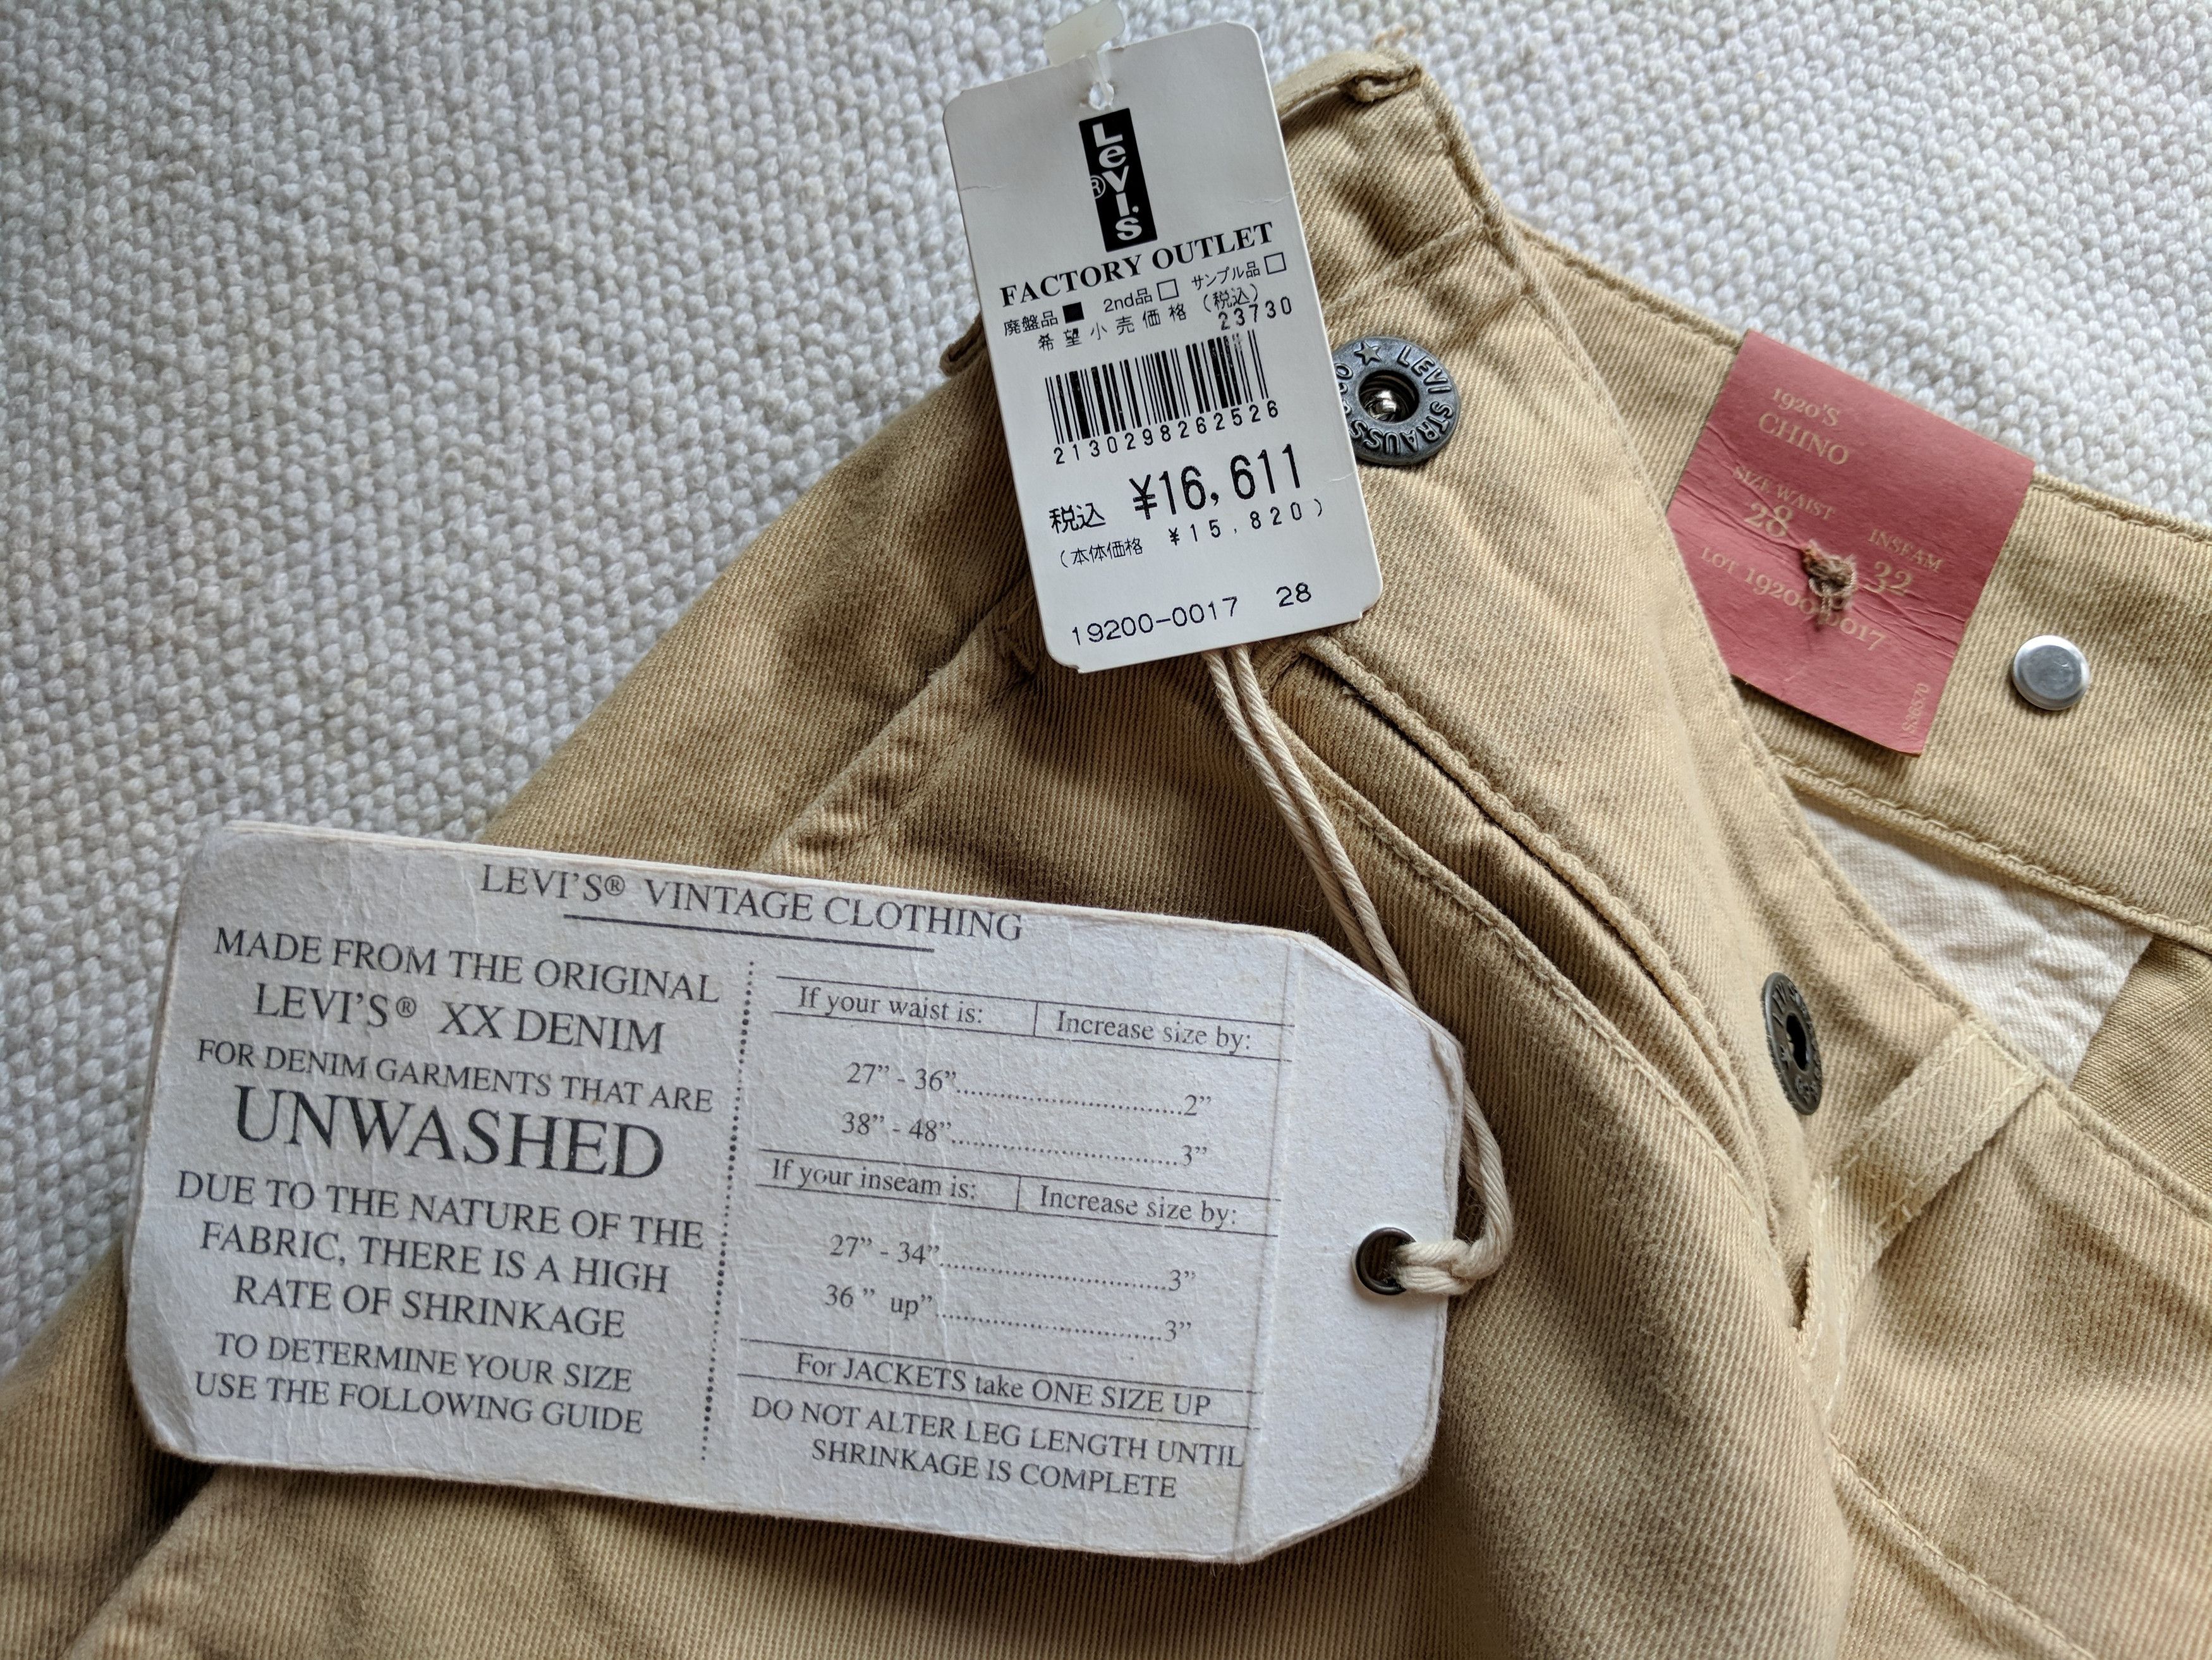 Levi's Levis LVC vintage clothing San Francisco deadstock khakis chino 1920s style pants size 29 30 Size US 29 - 7 Thumbnail